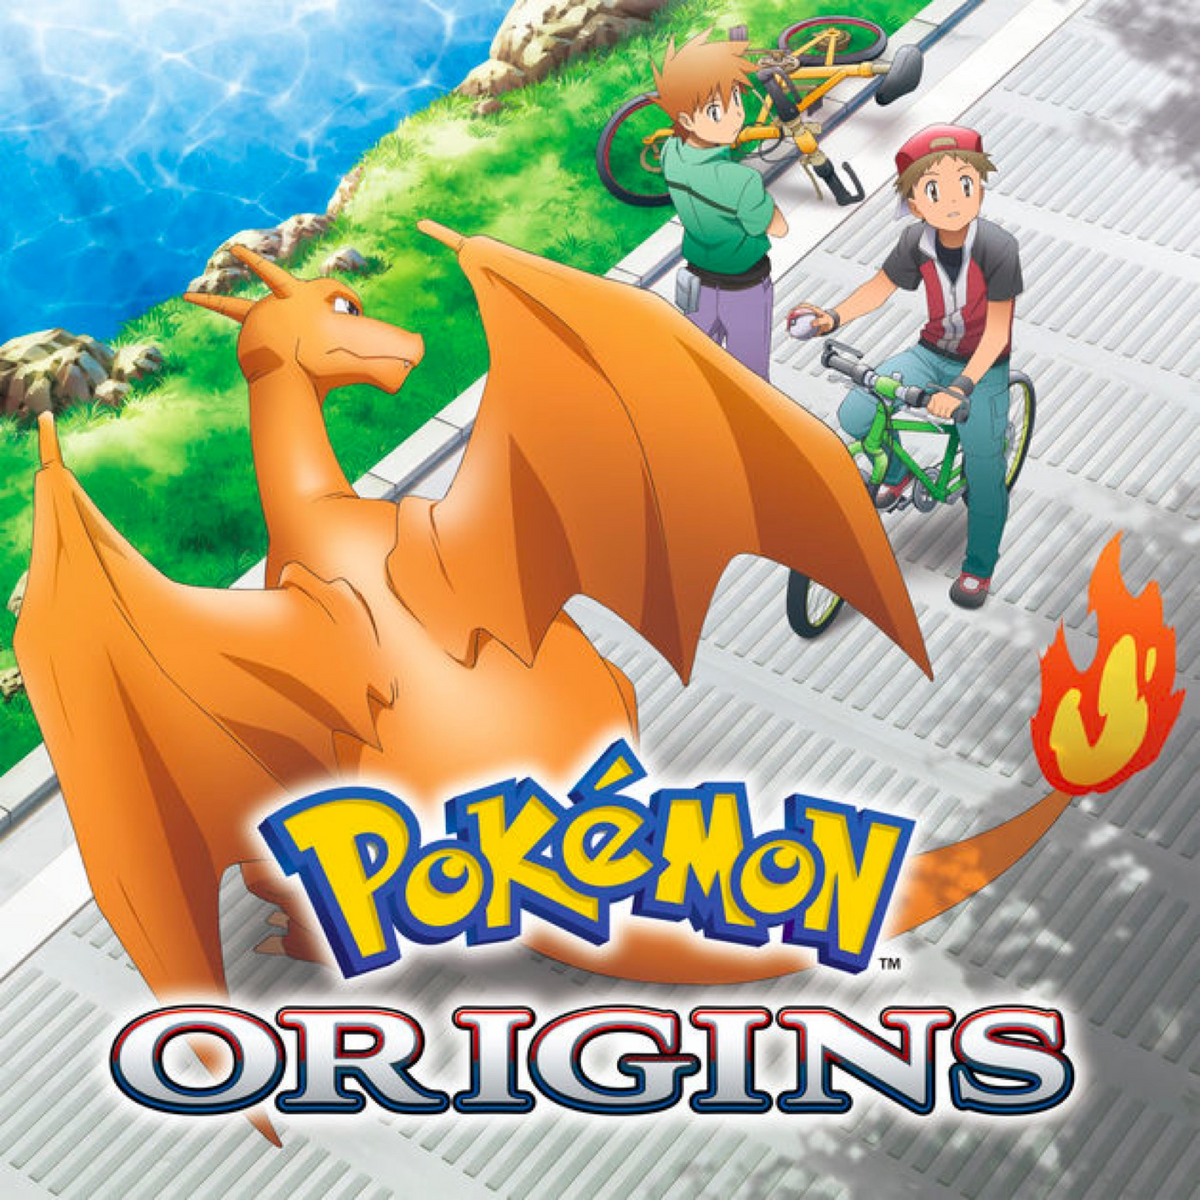 Pokémon Origins (TV Mini Series 2013) - IMDb